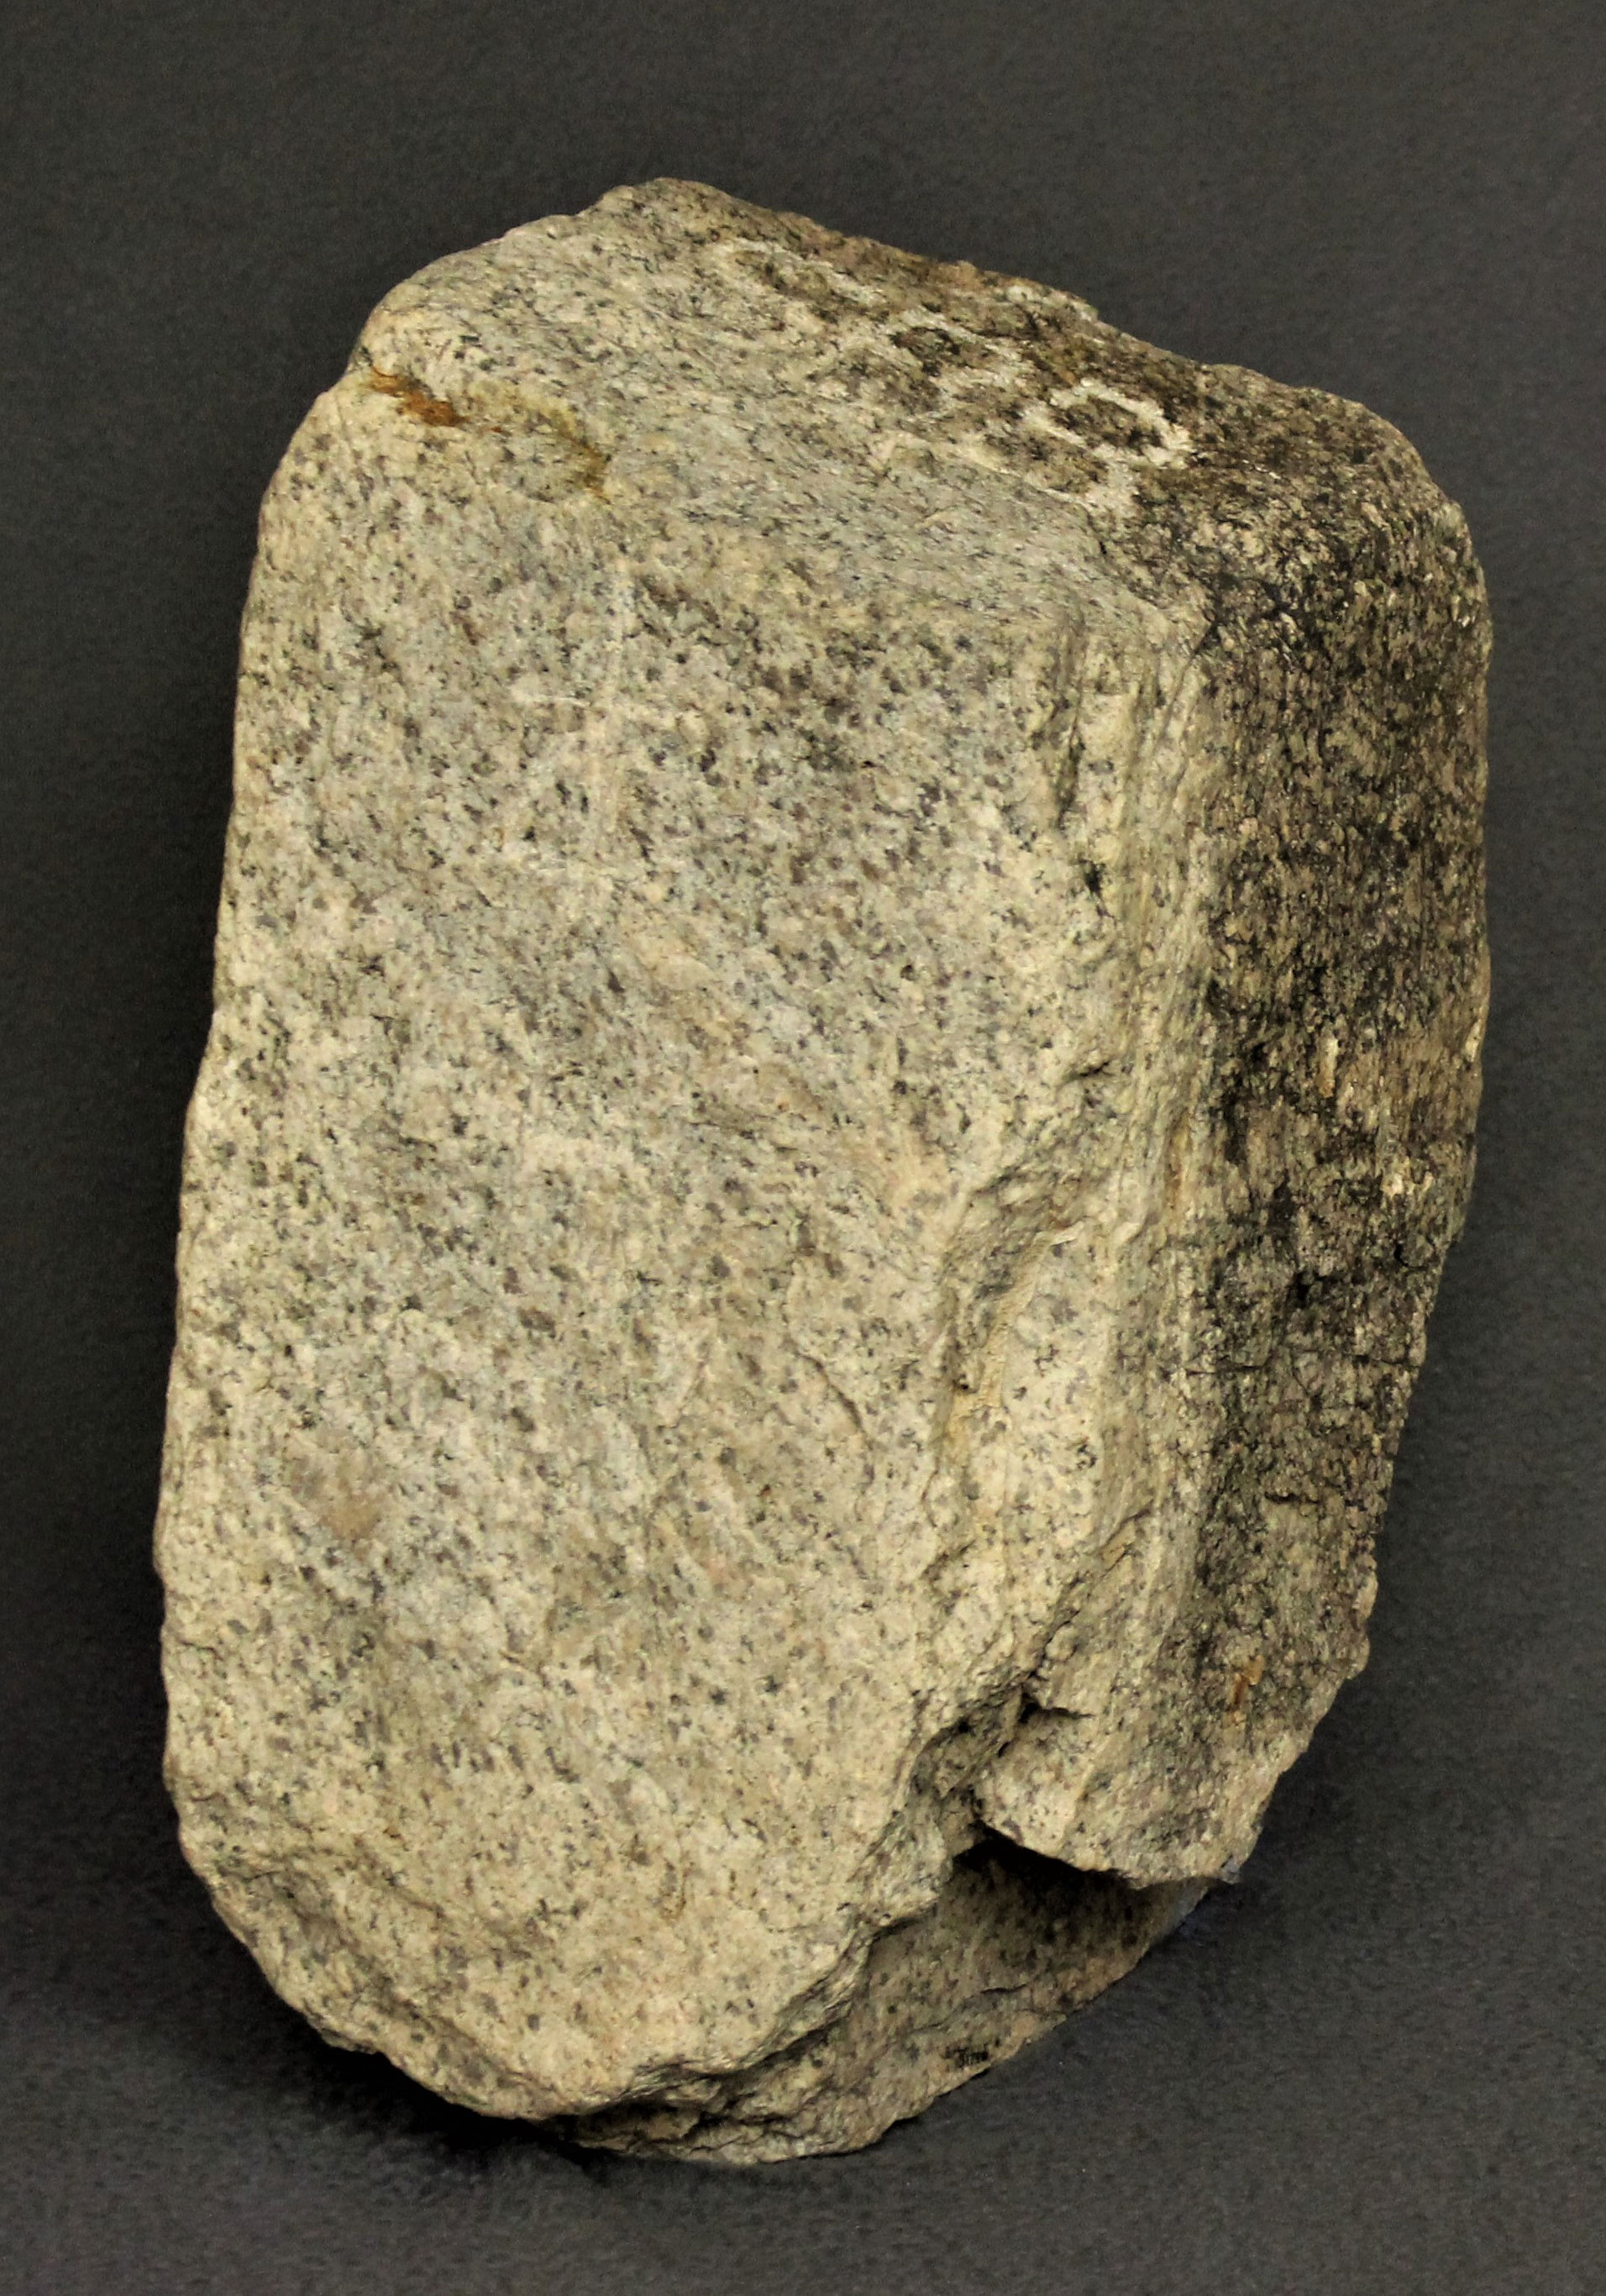 Benchmark Stone